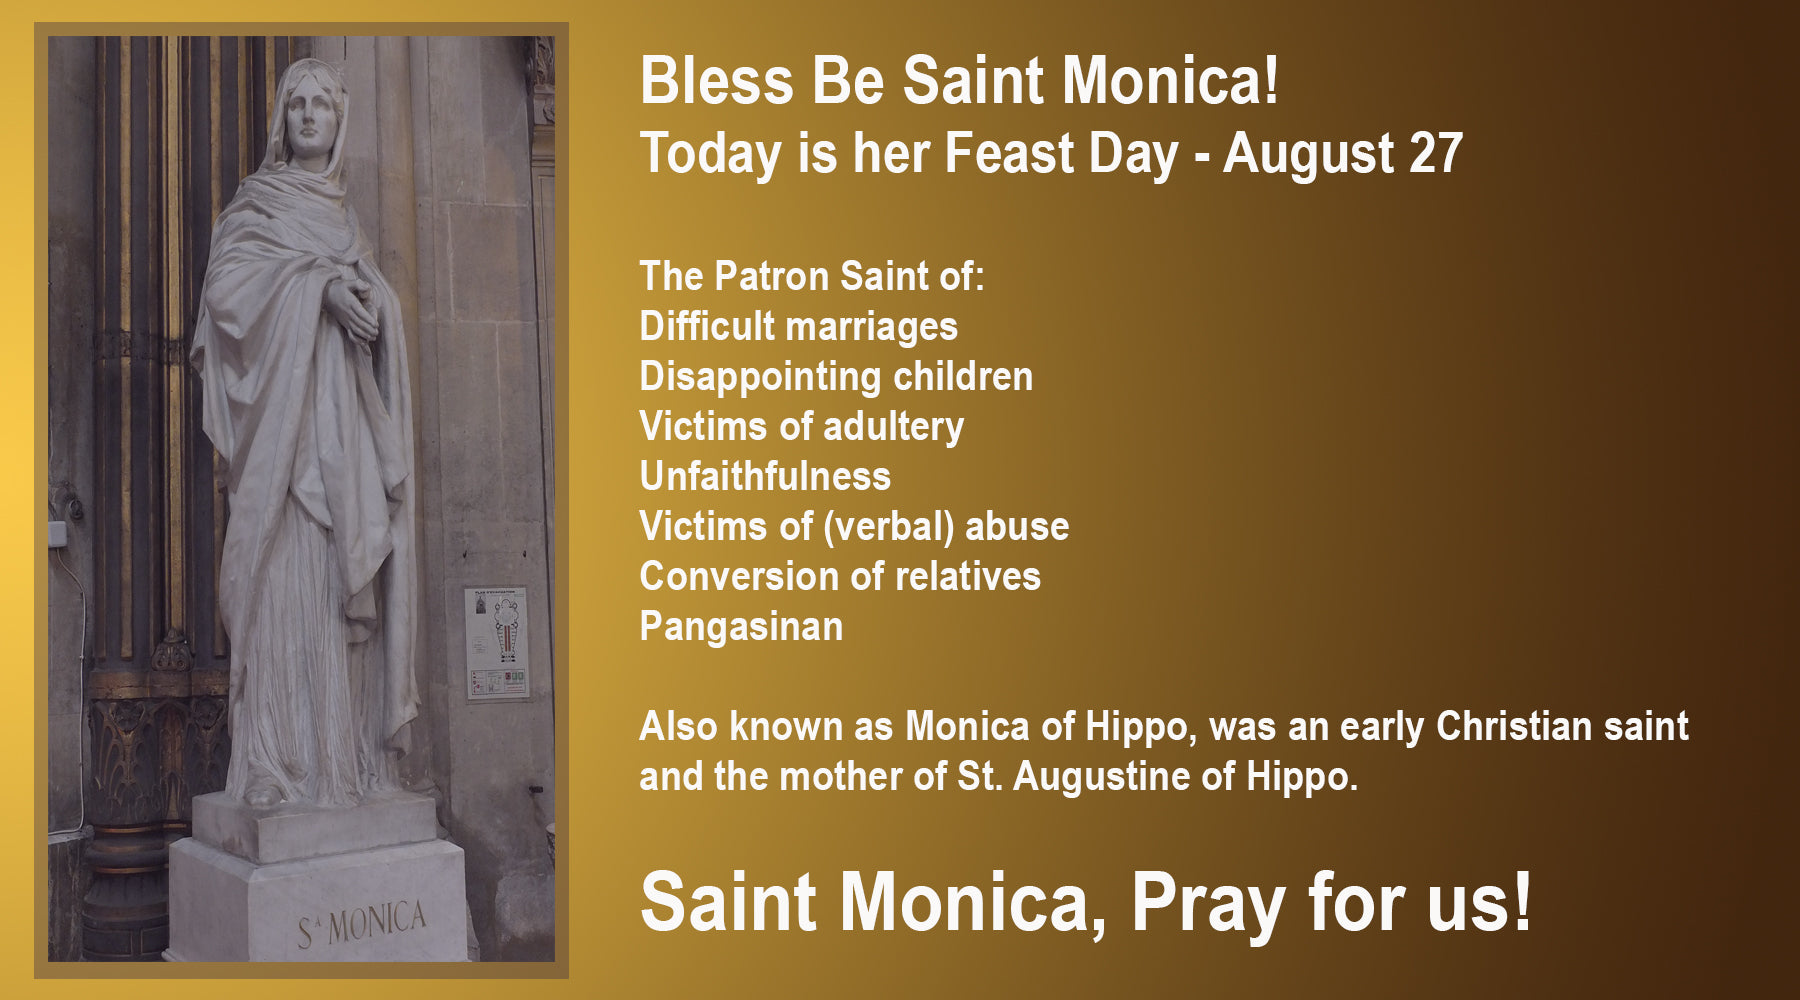 Feast of Saint Monica, August 27